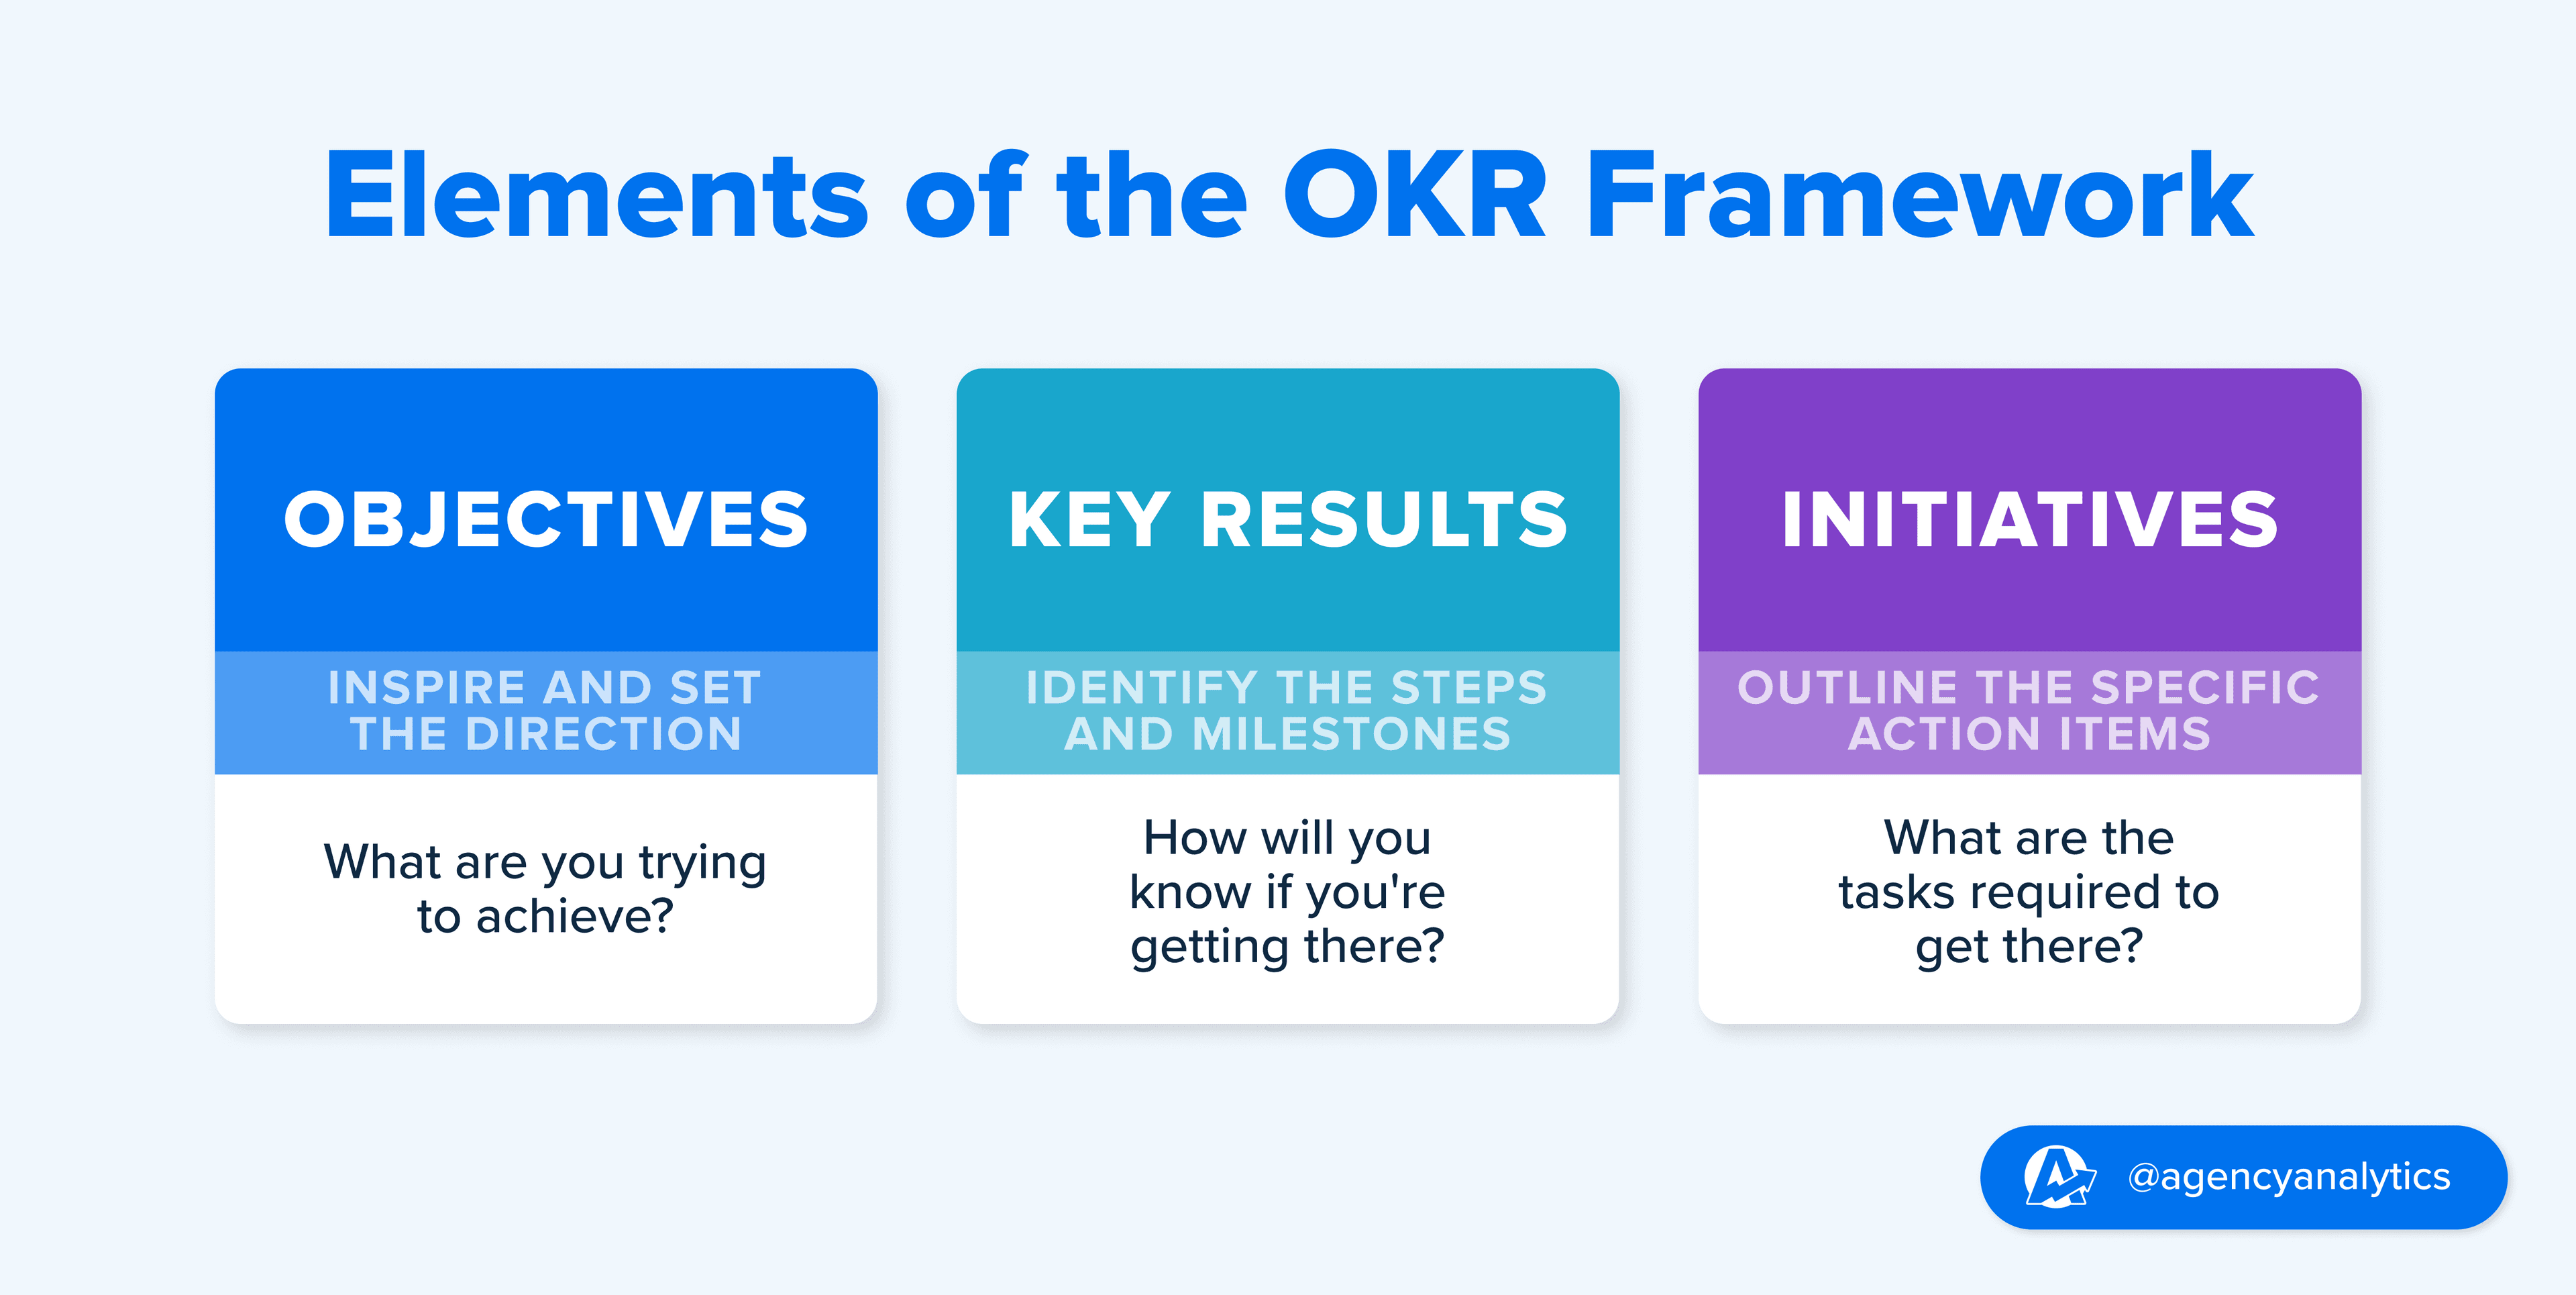 Elements of the OKR Framework